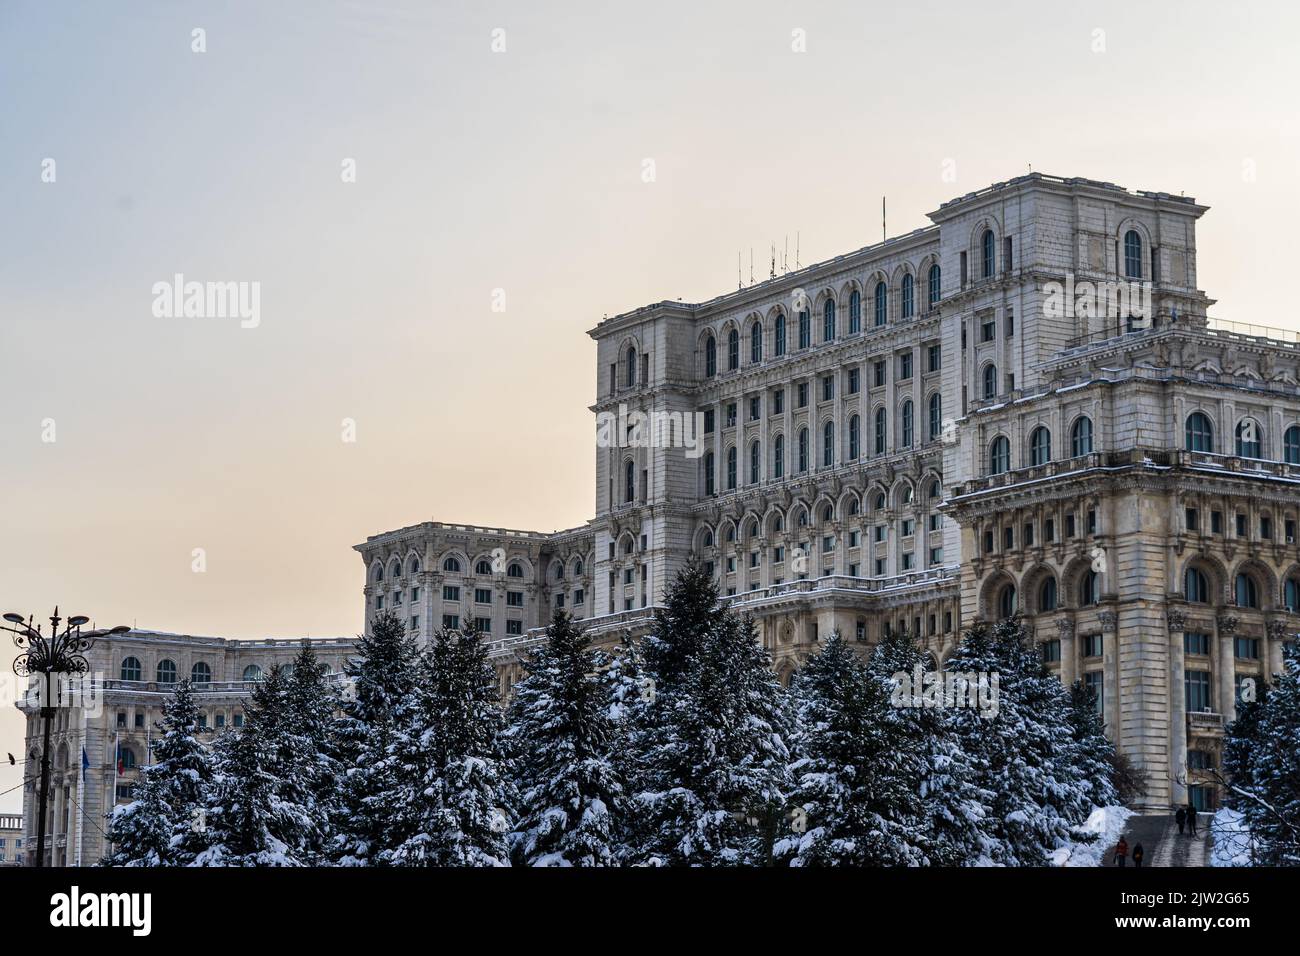 Palace of the Parliament, Bucharest, Romania - winter scene Stock Photo